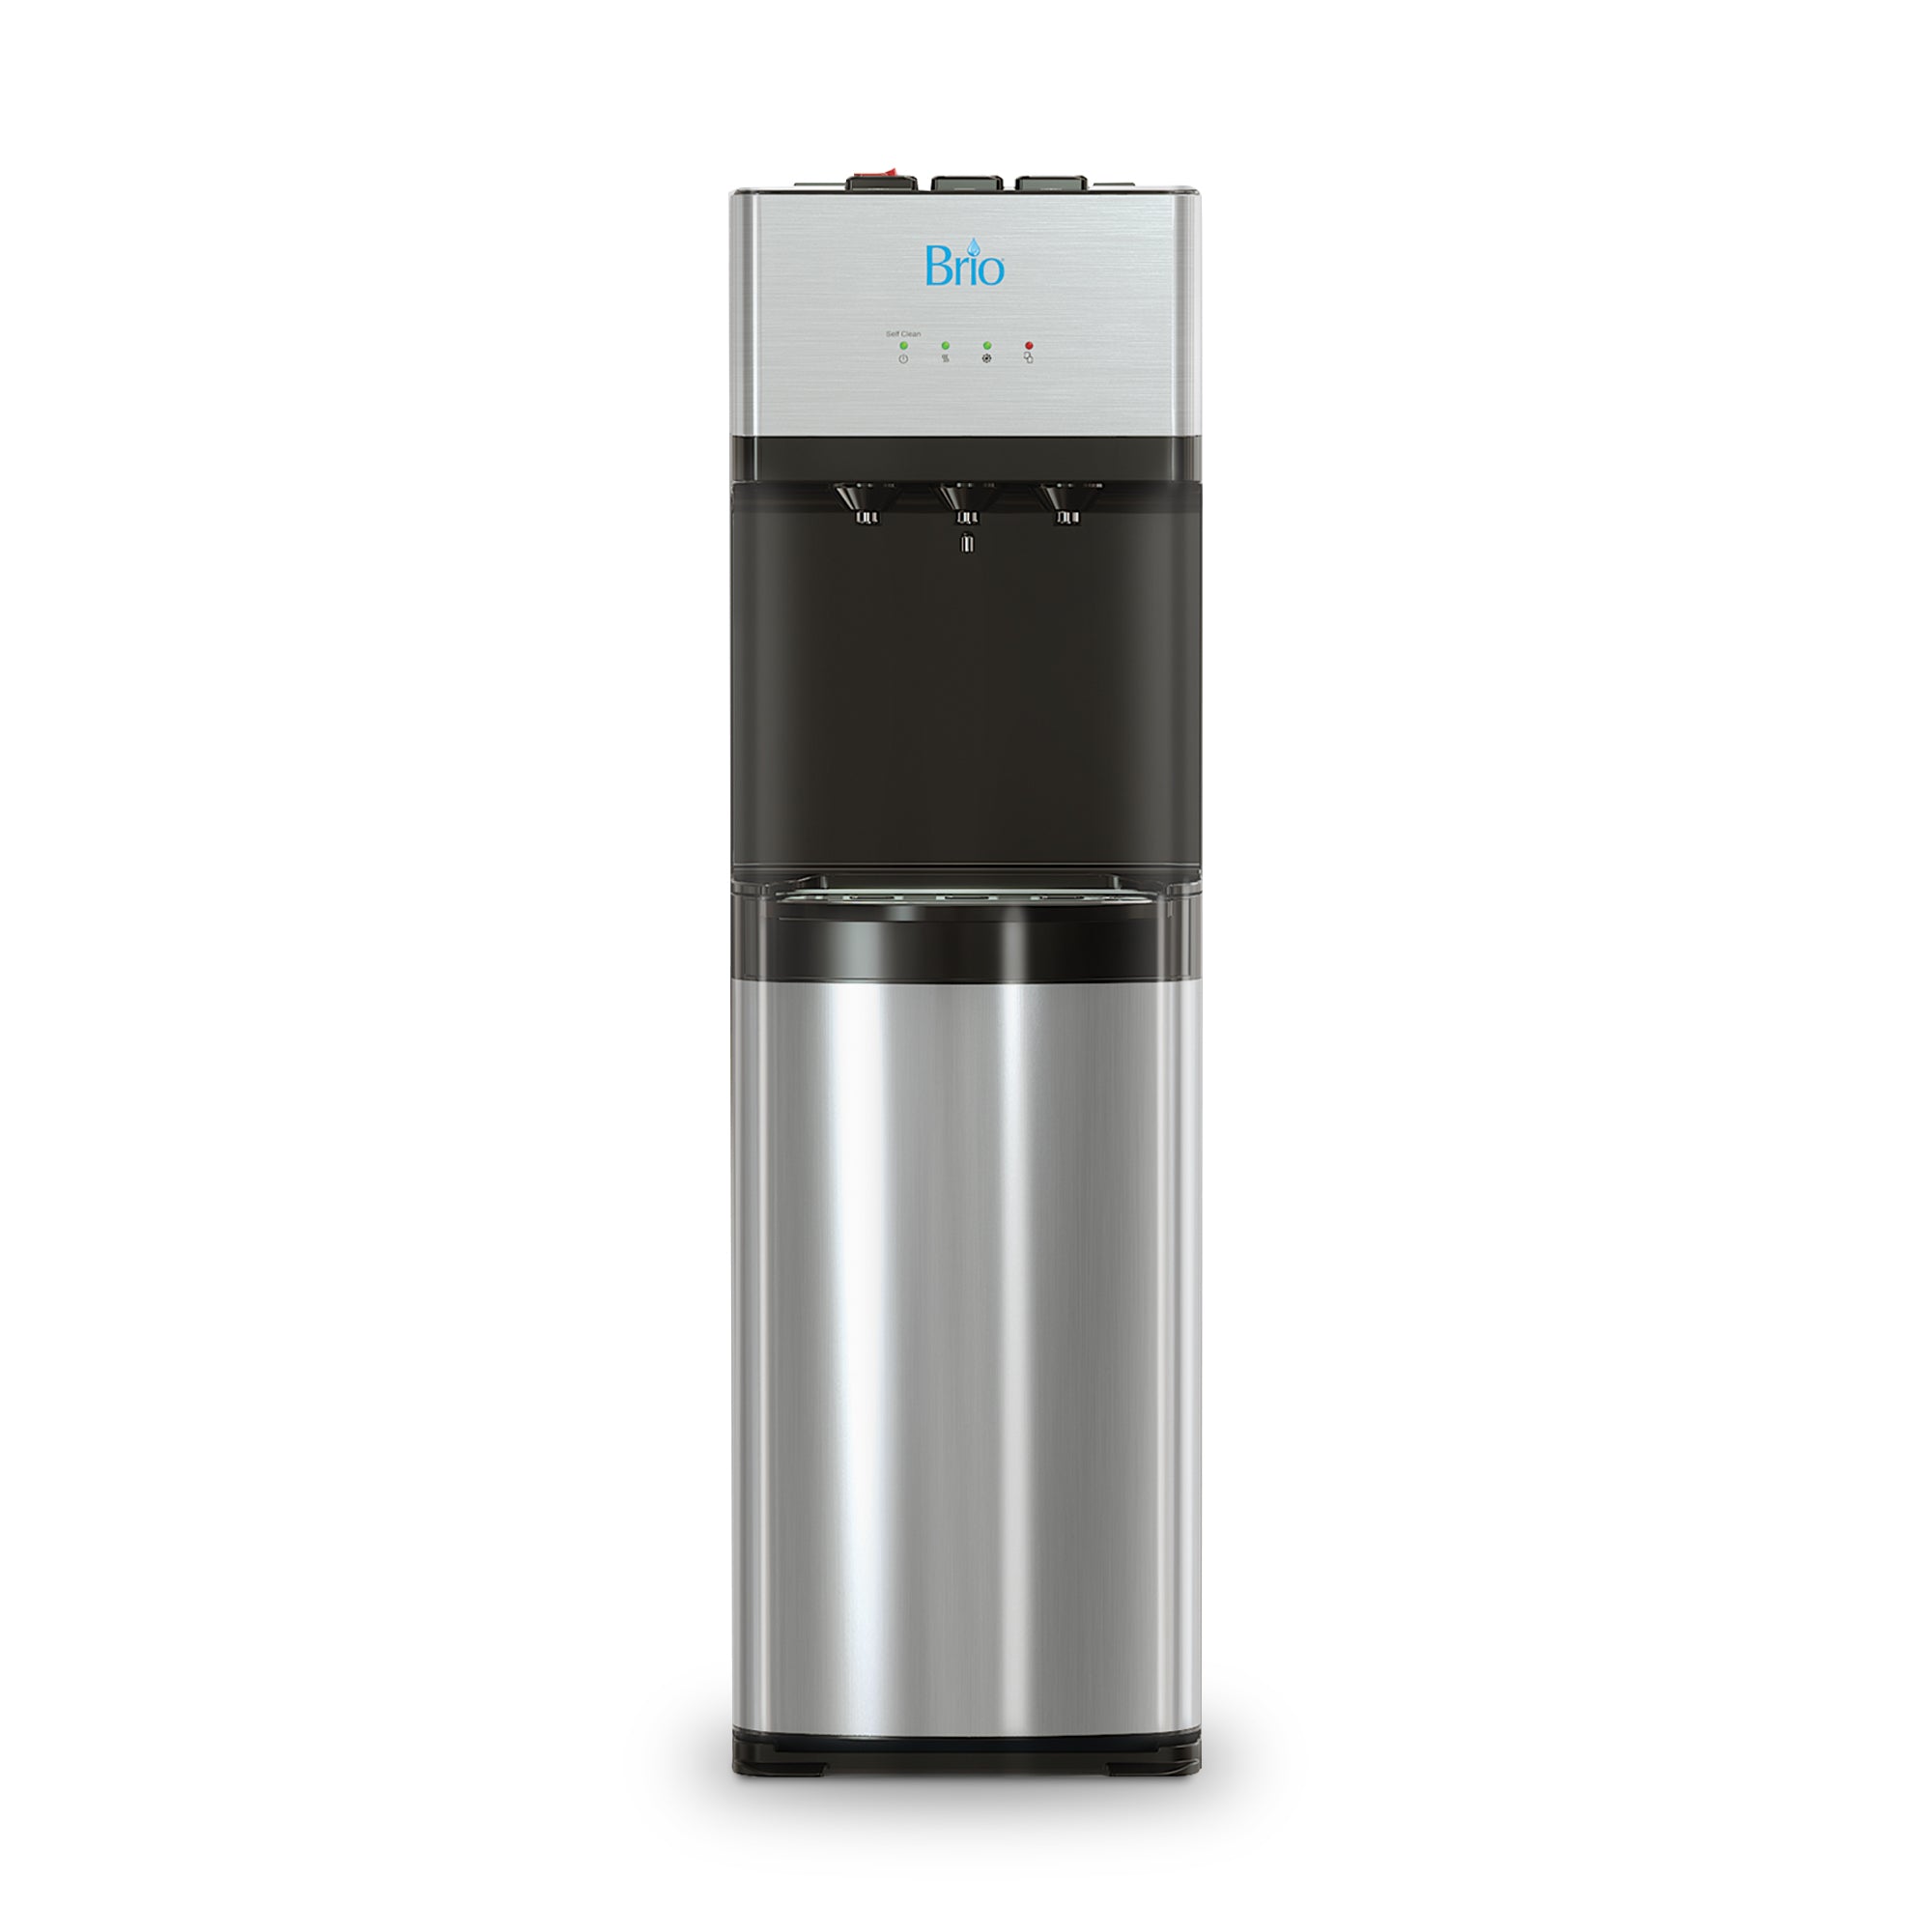 Brio Moderna Coffee Maker & Bottom Load Water Cooler